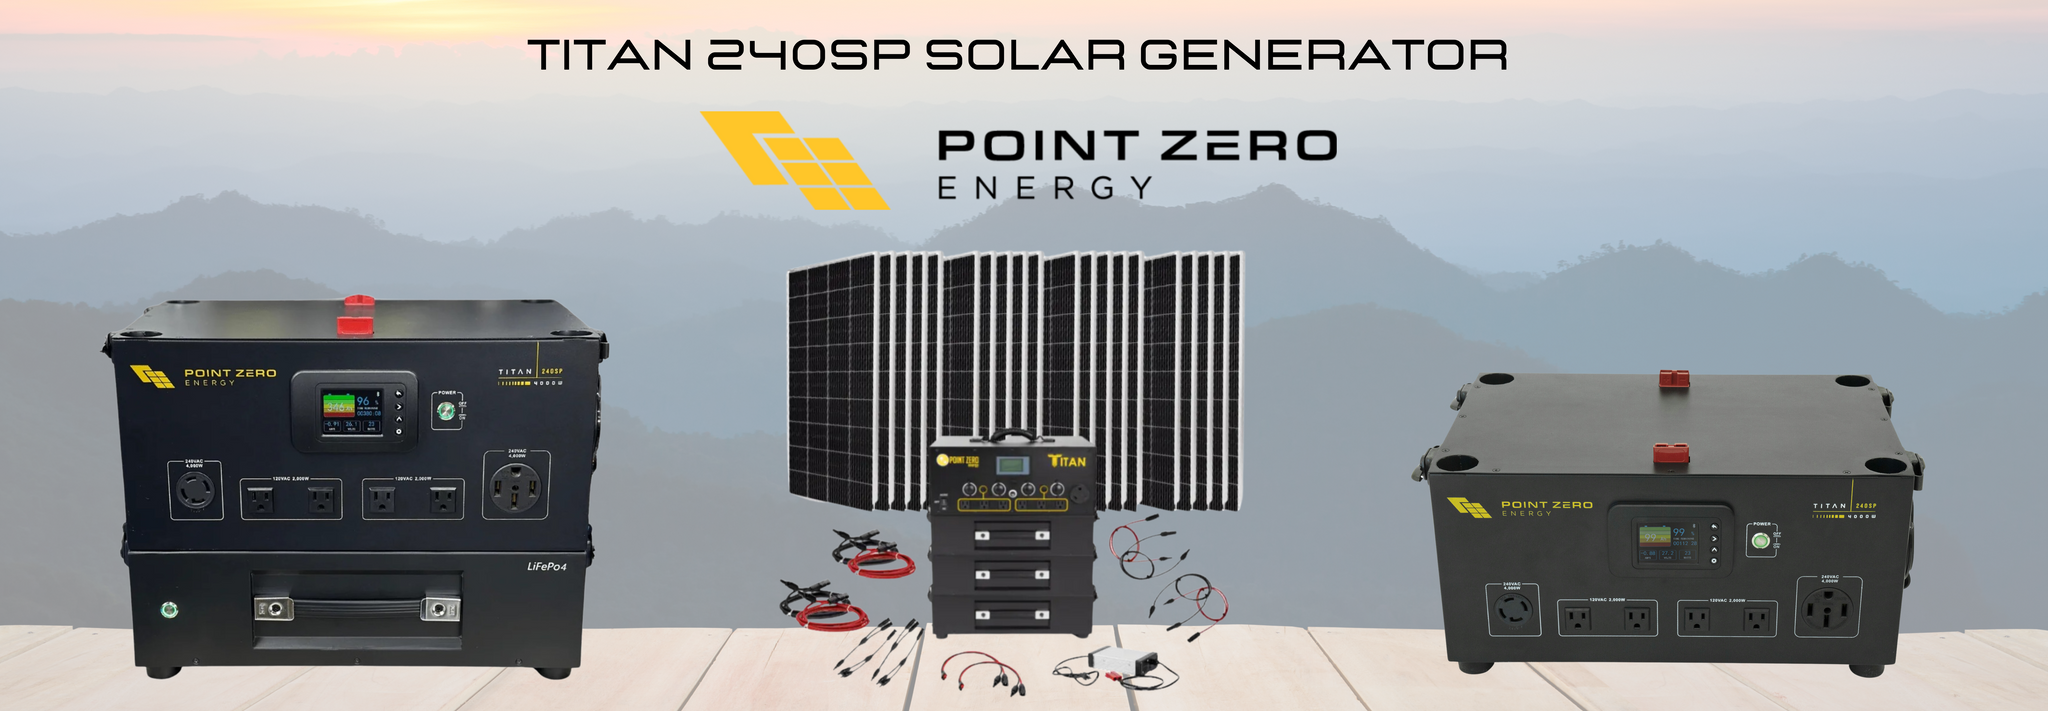 Titan 240SP Solar Generator by Point Zero Energy